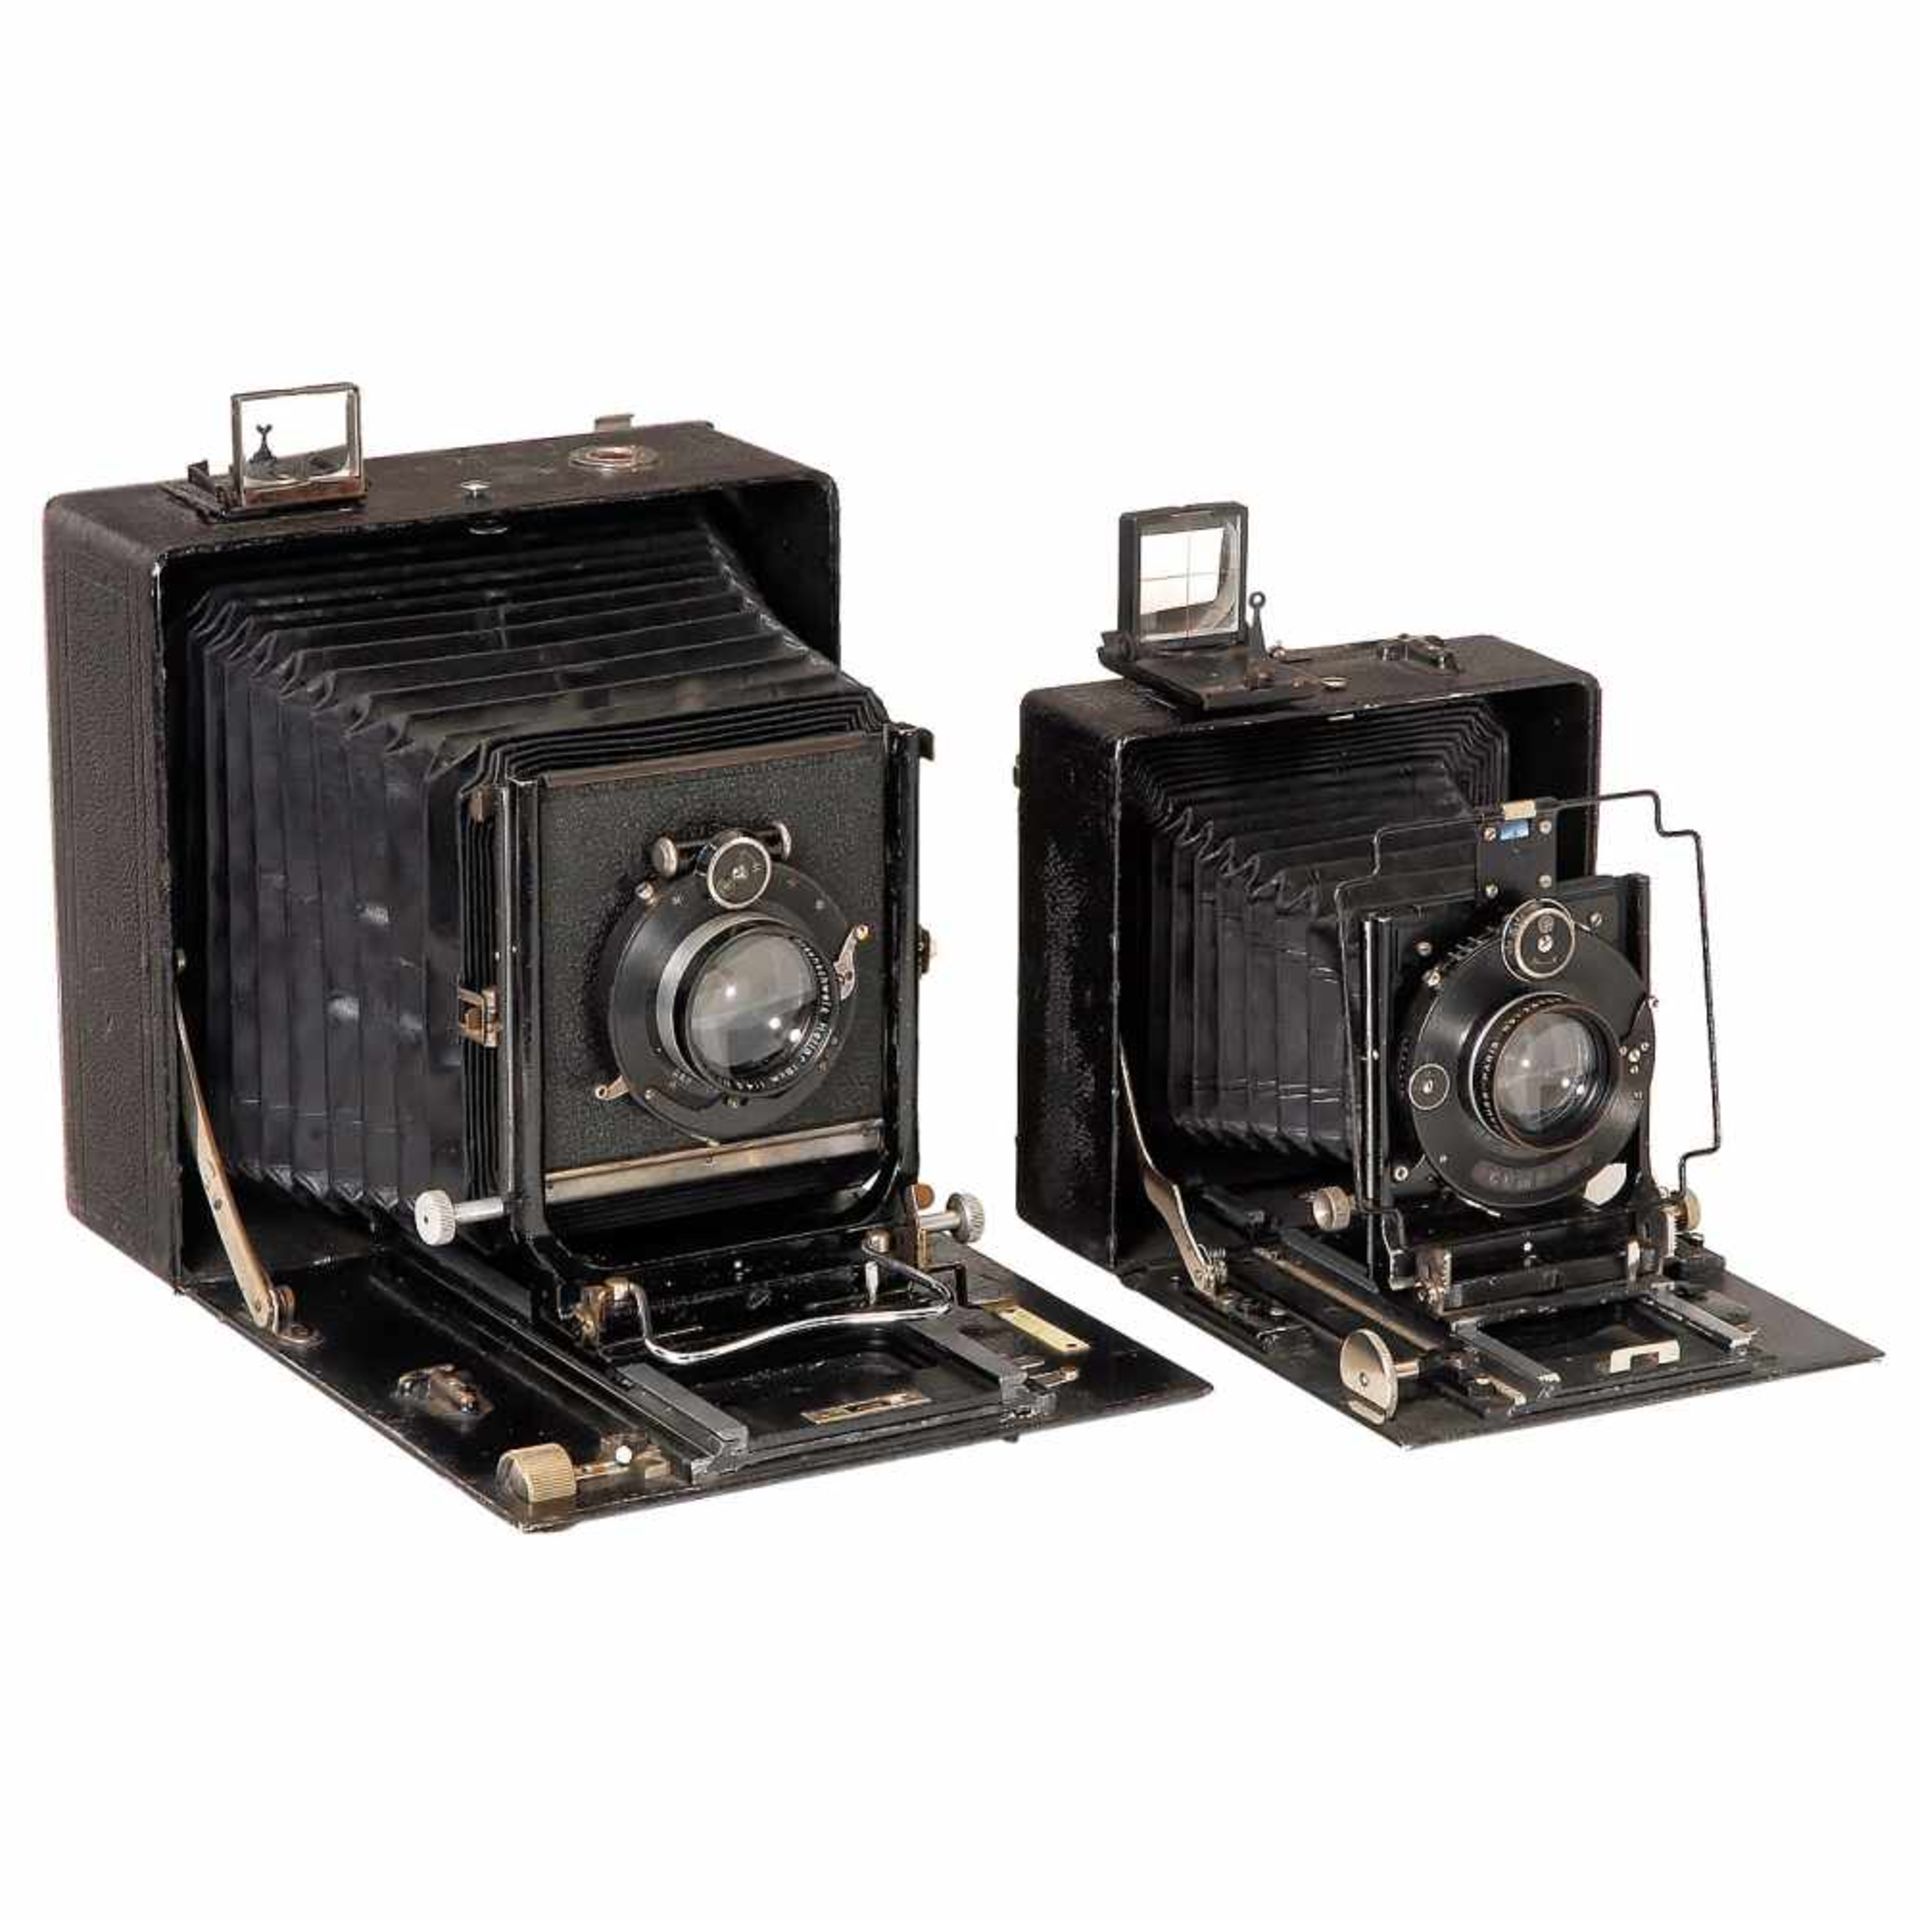 2 Professional Folding-Plate Cameras1) Linhof, Munich. Linhof-Präzisions-Camera 13 x 18 cm, c. 1920.